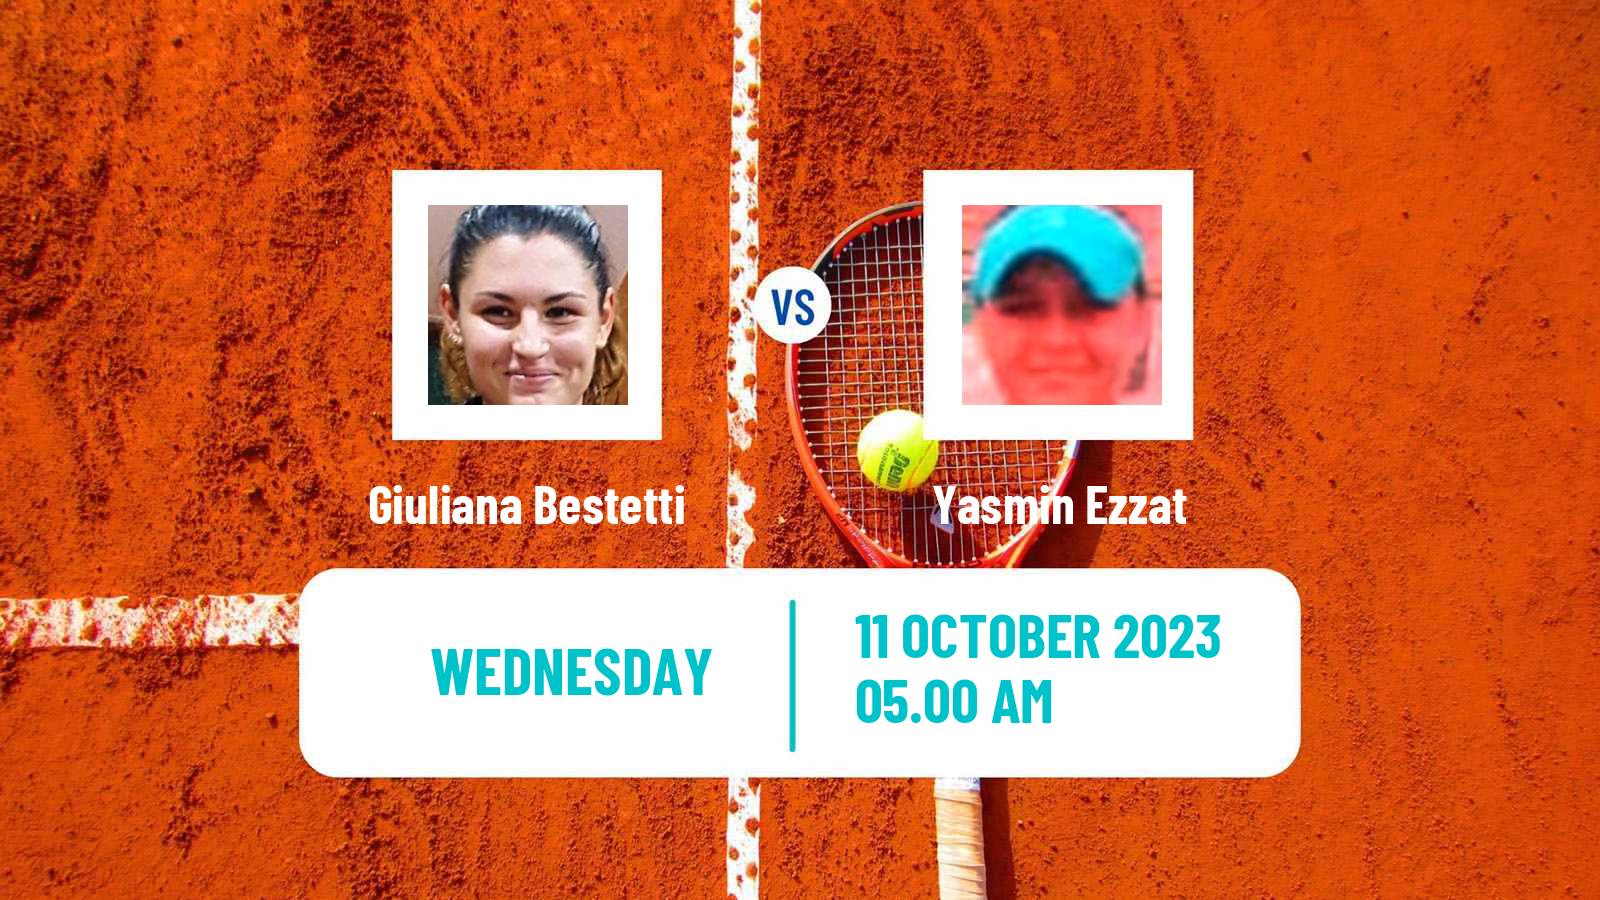 Tennis ITF W15 Sharm Elsheikh 14 Women Giuliana Bestetti - Yasmin Ezzat